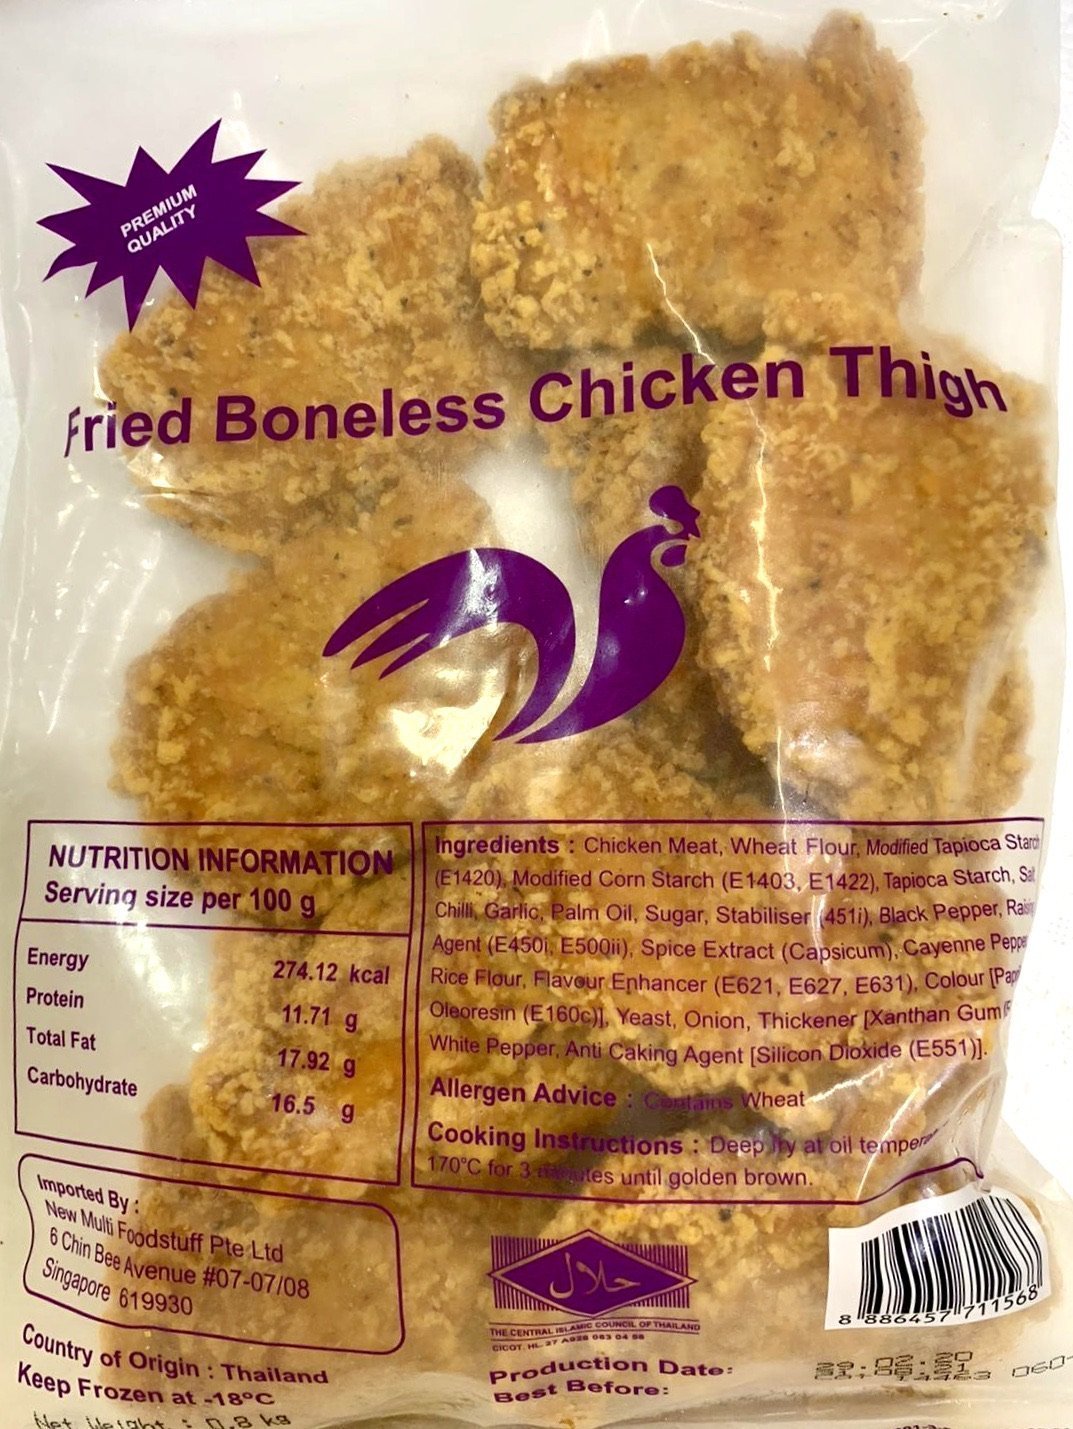 Fried Boneless Chicken Thigh - Spicy (MCD) / 800g*